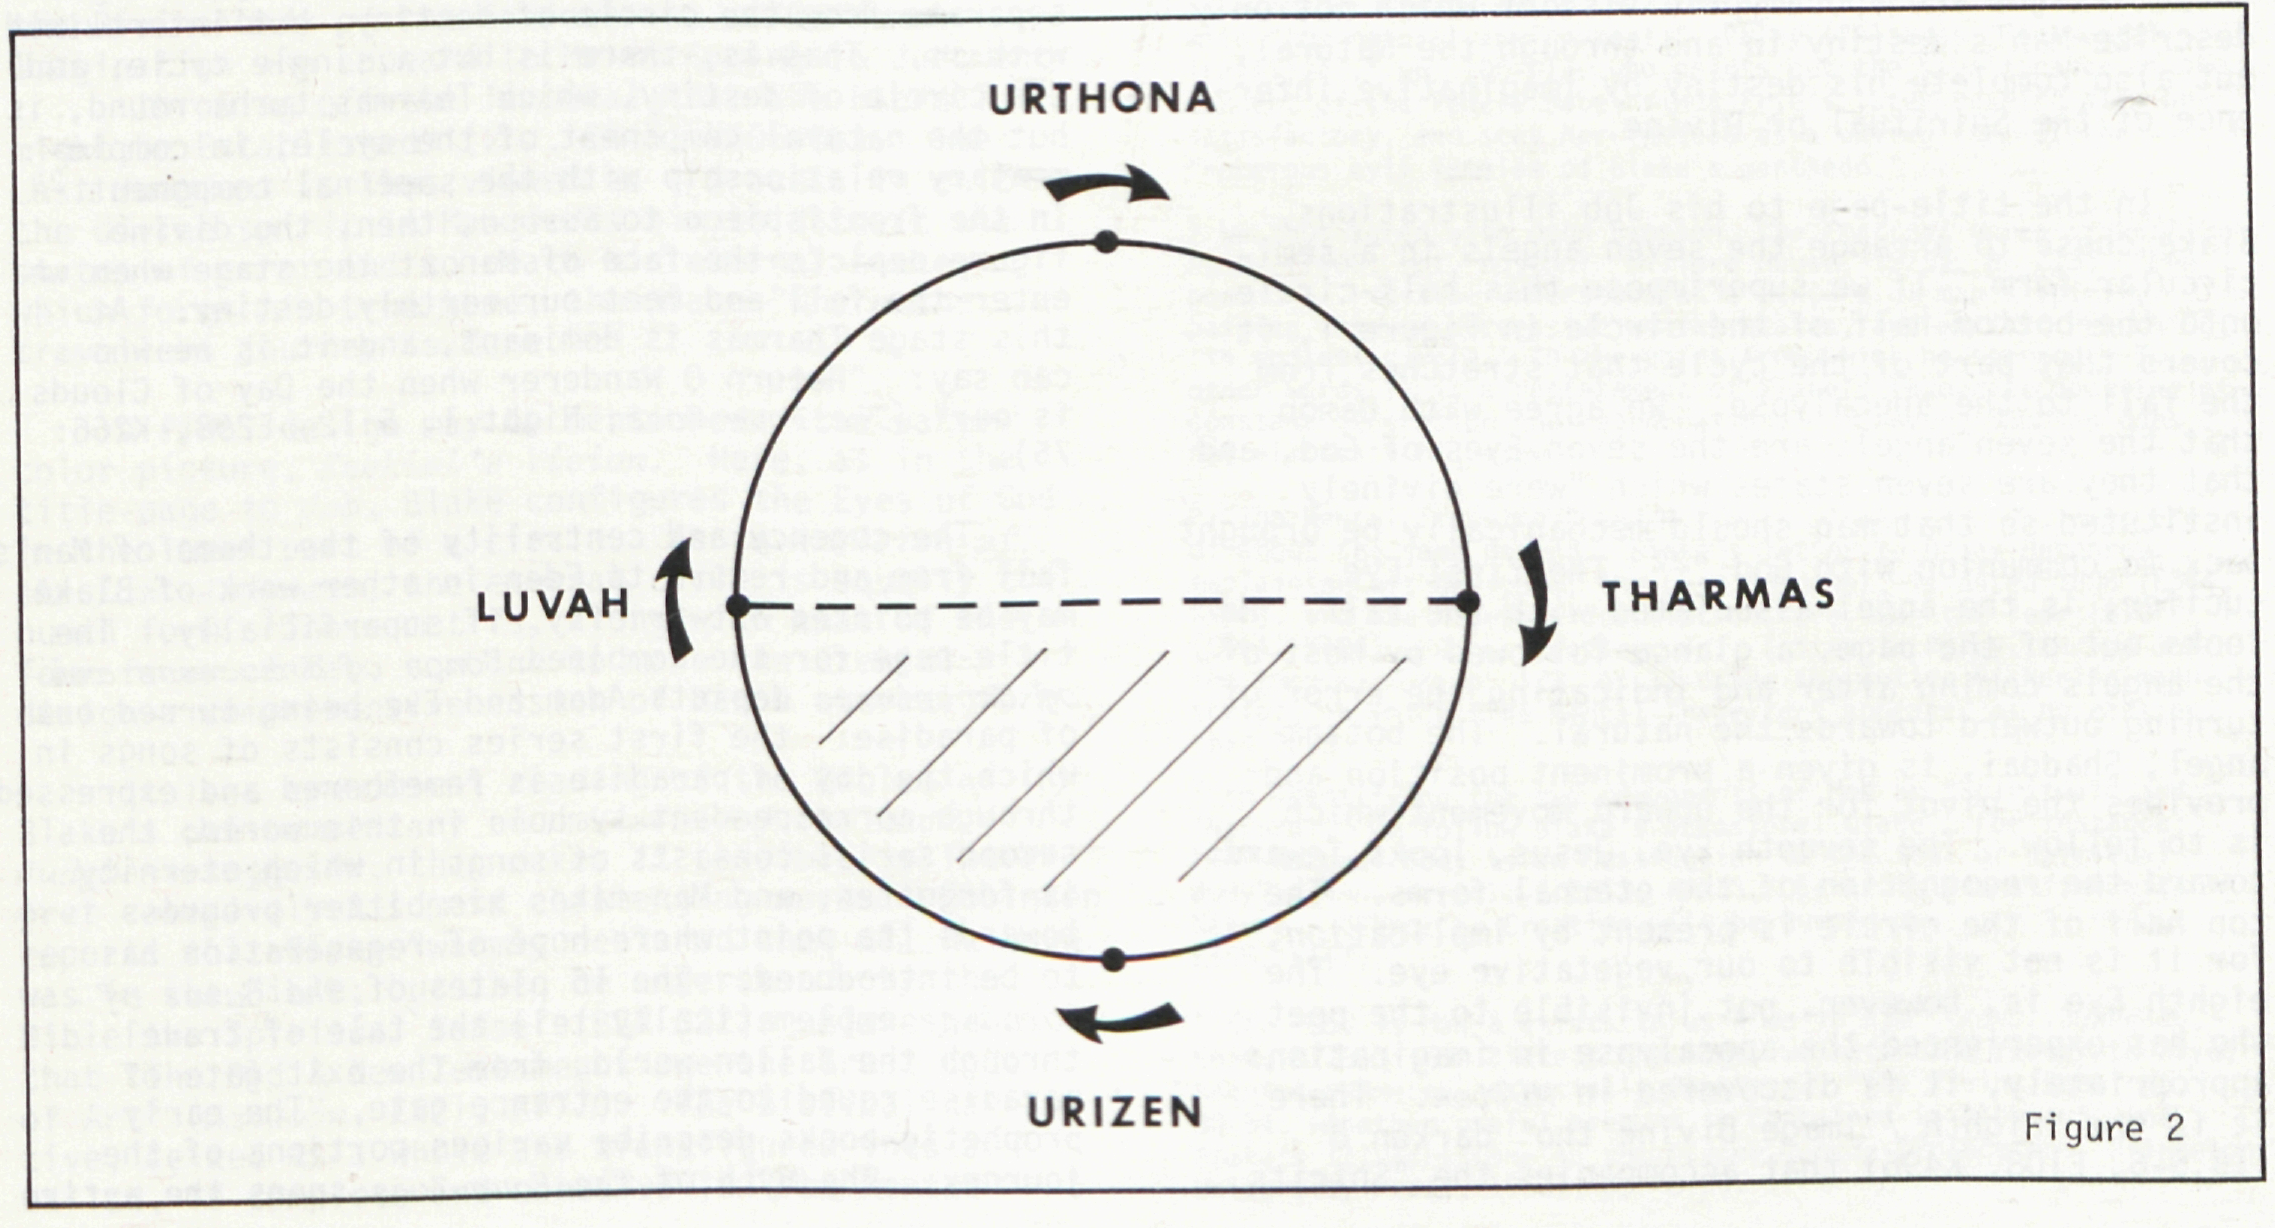 URTHONA
	
	LUVAH
	
	THARMAS
	
	URIZEN
	
	Figure 2